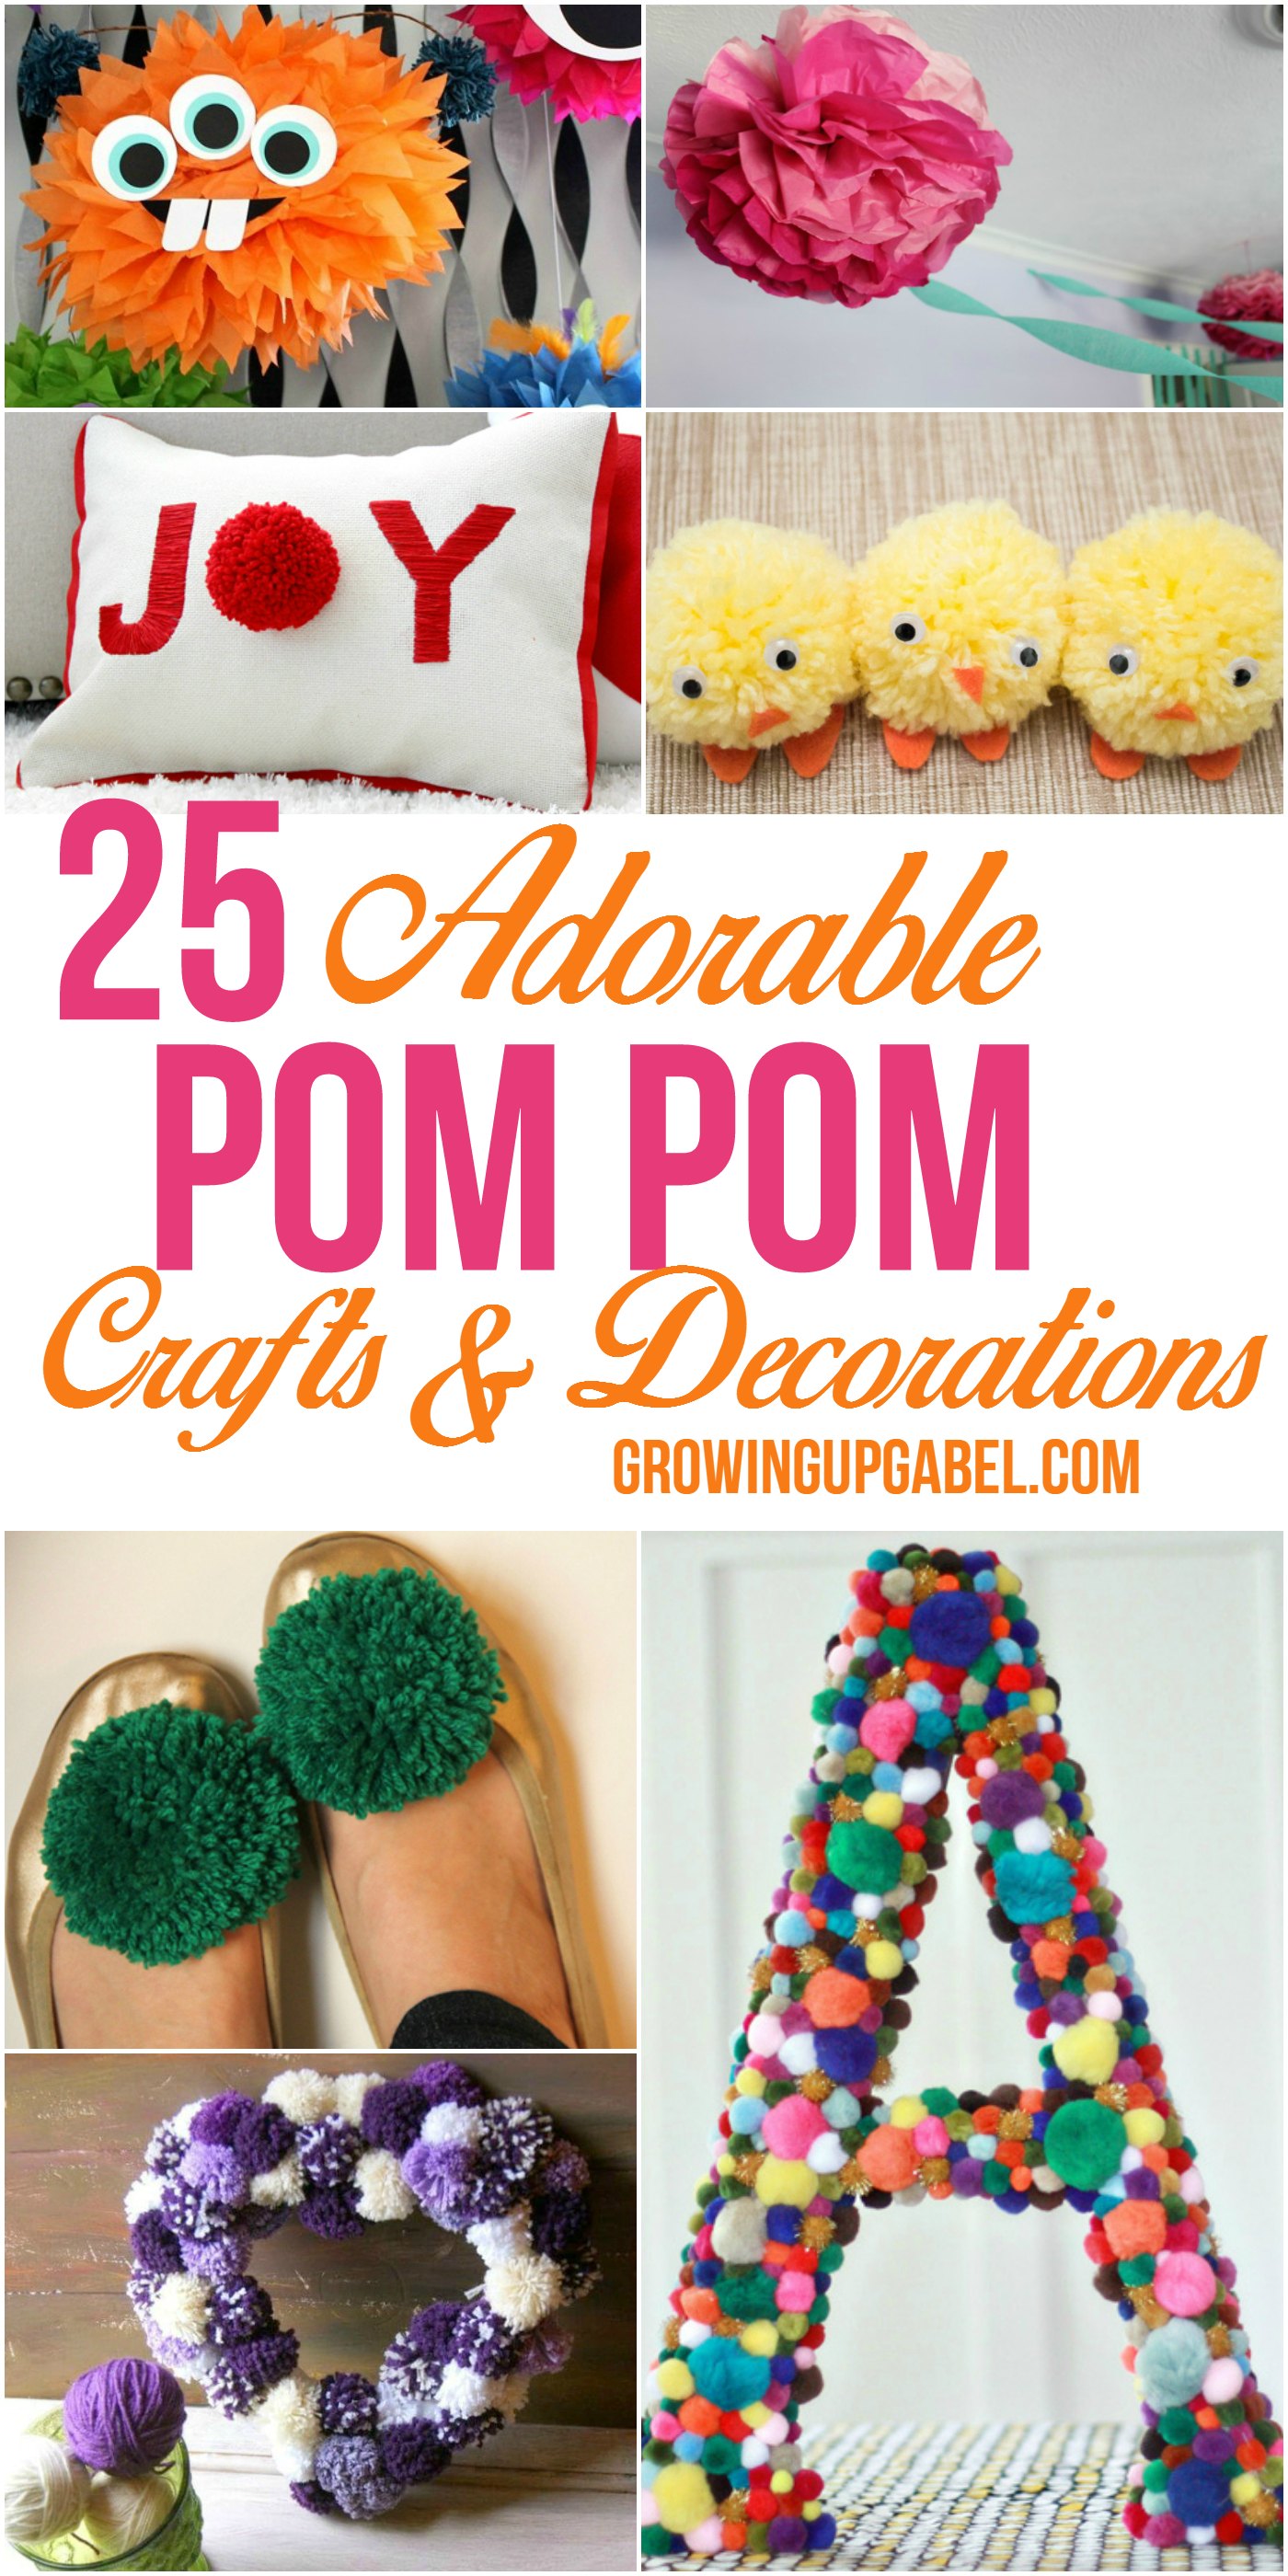 Pom pom crafts and decorations are easy and fun to make! Make pom pom crafts using yarn pom poms, paper pom poms and even dollar store pom poms.